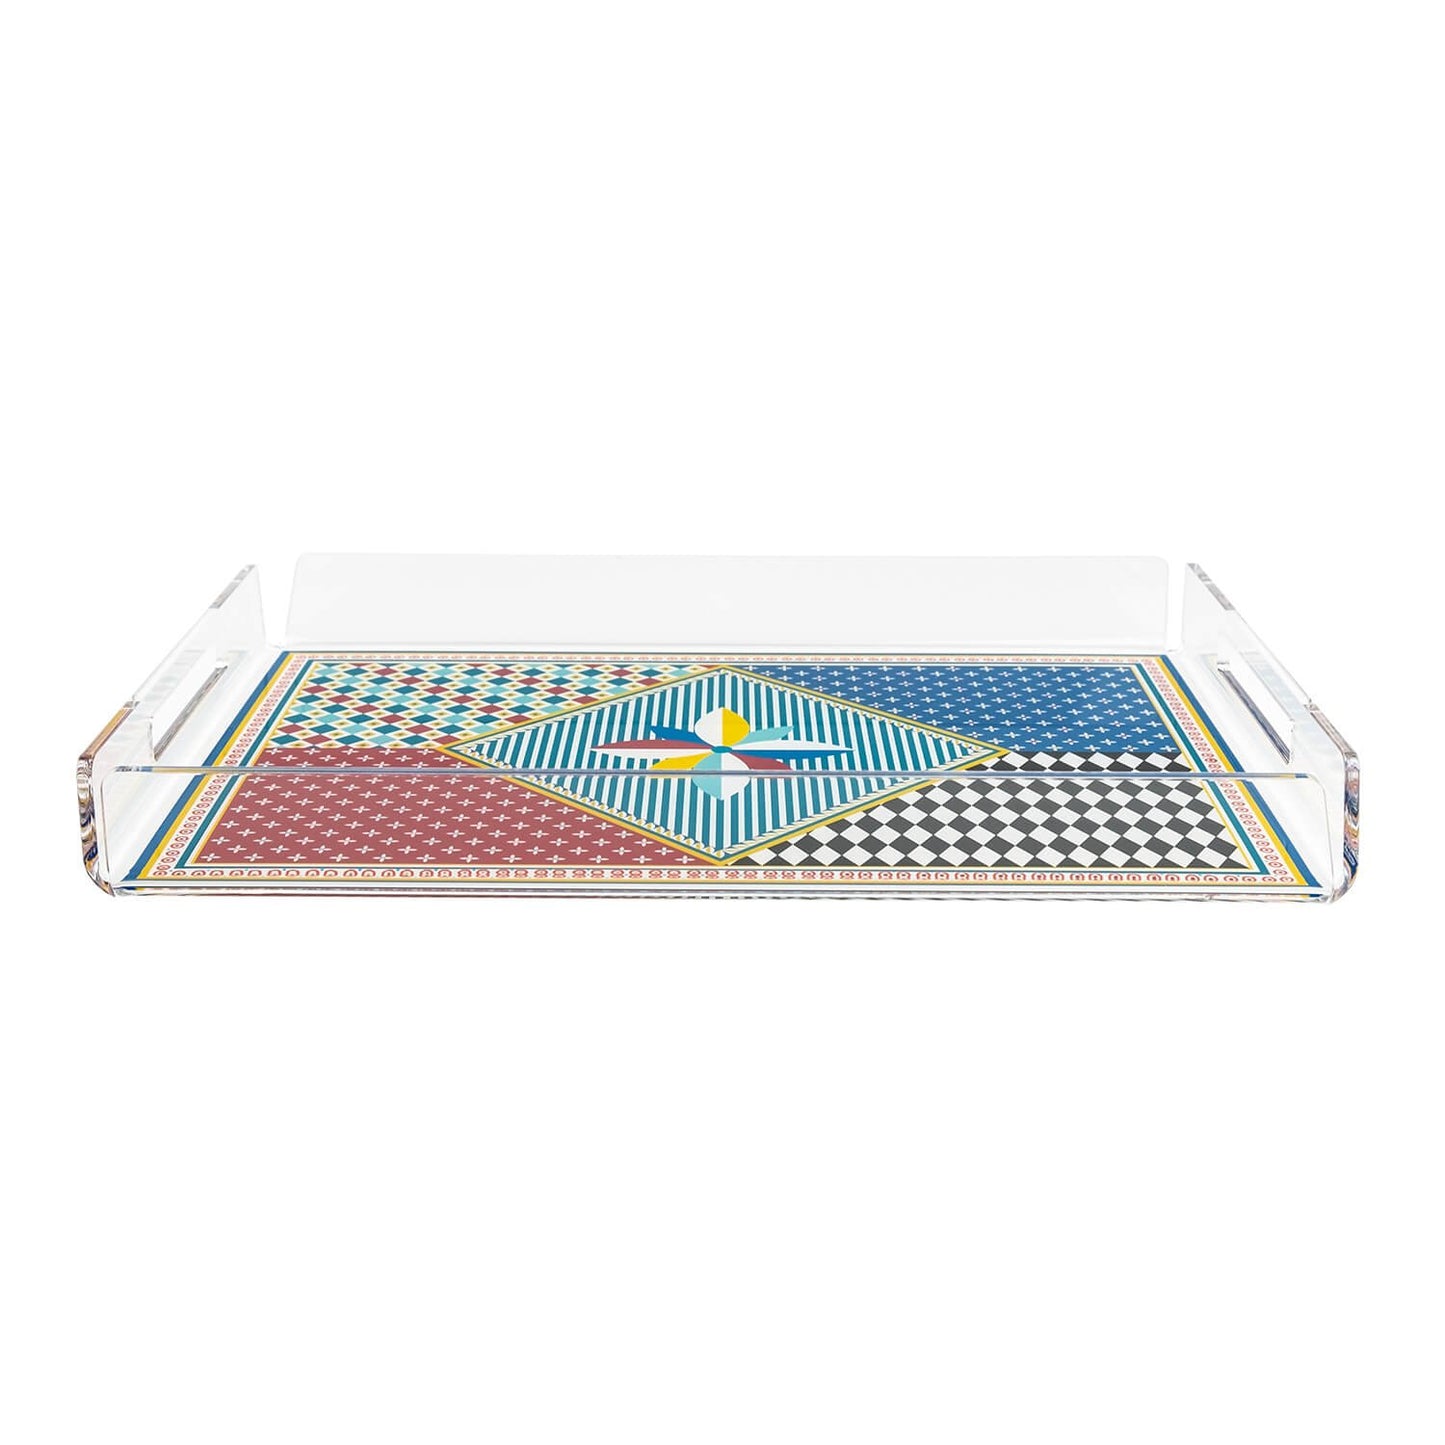 Decor line small tray in acrylic crystal - Vesta collection (32 cm x 22 cm)